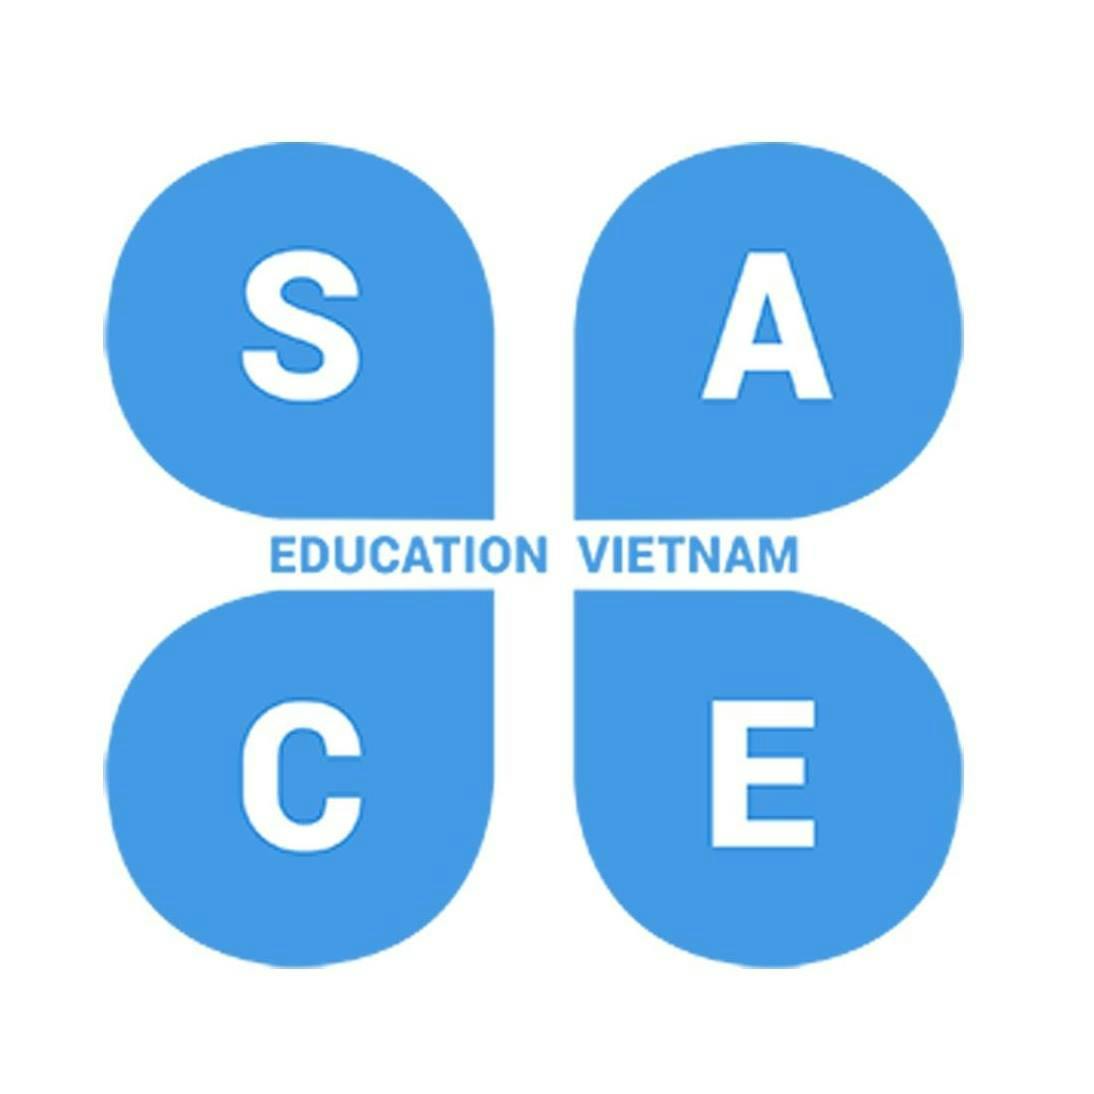 SACE Education Vietnam